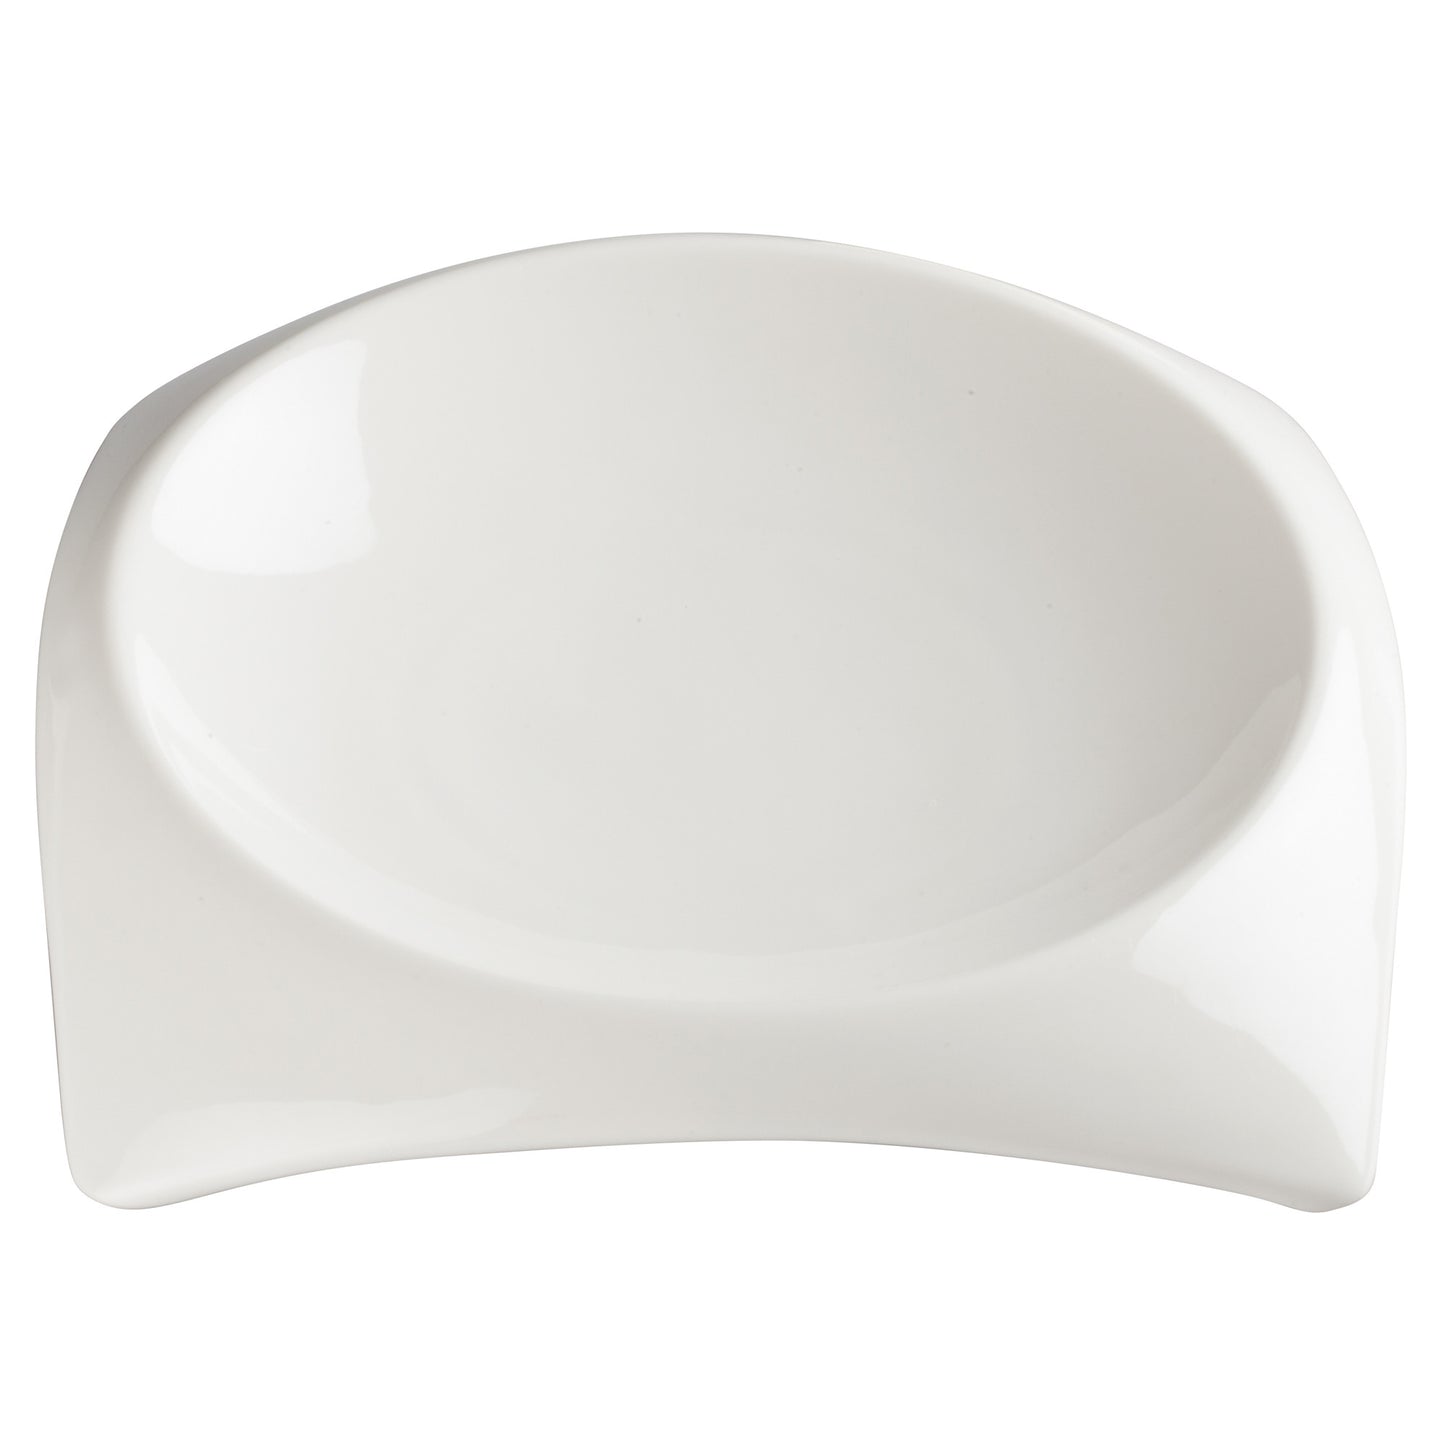 WDP005-102 - 7-3/4"Sq (6-3/4" Dia)Porcelain Square Deep Bowl, Bright White, 24 pcs/case